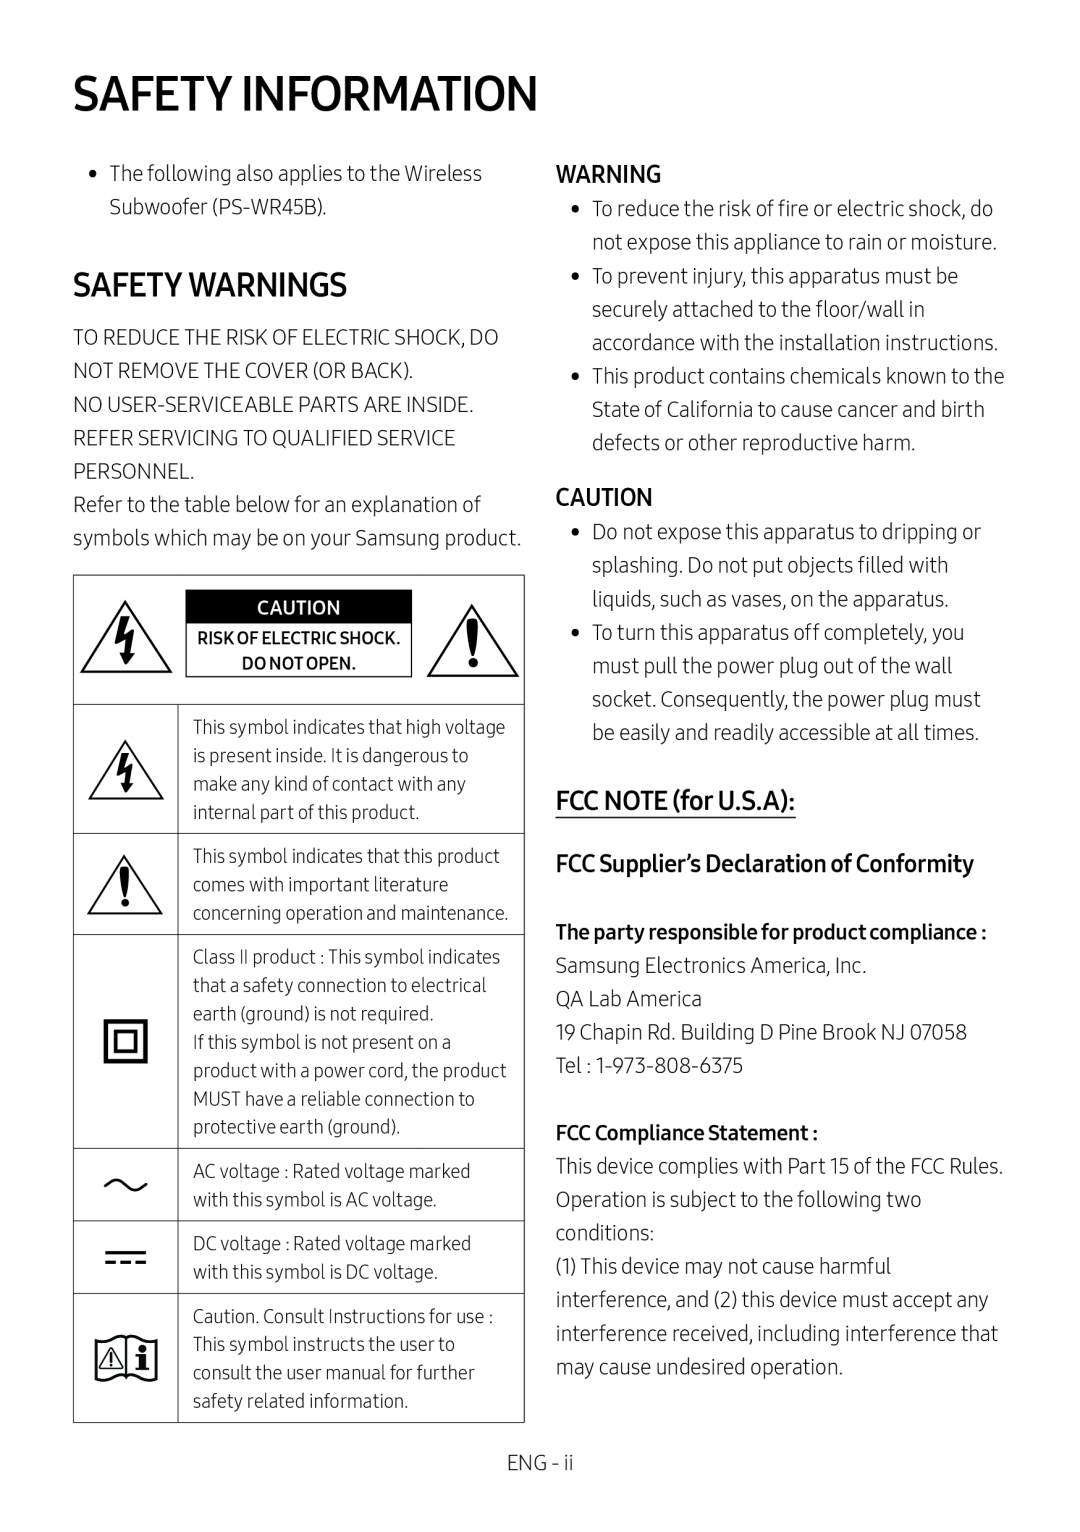 SAFETY WARNINGS Standard HW-R450